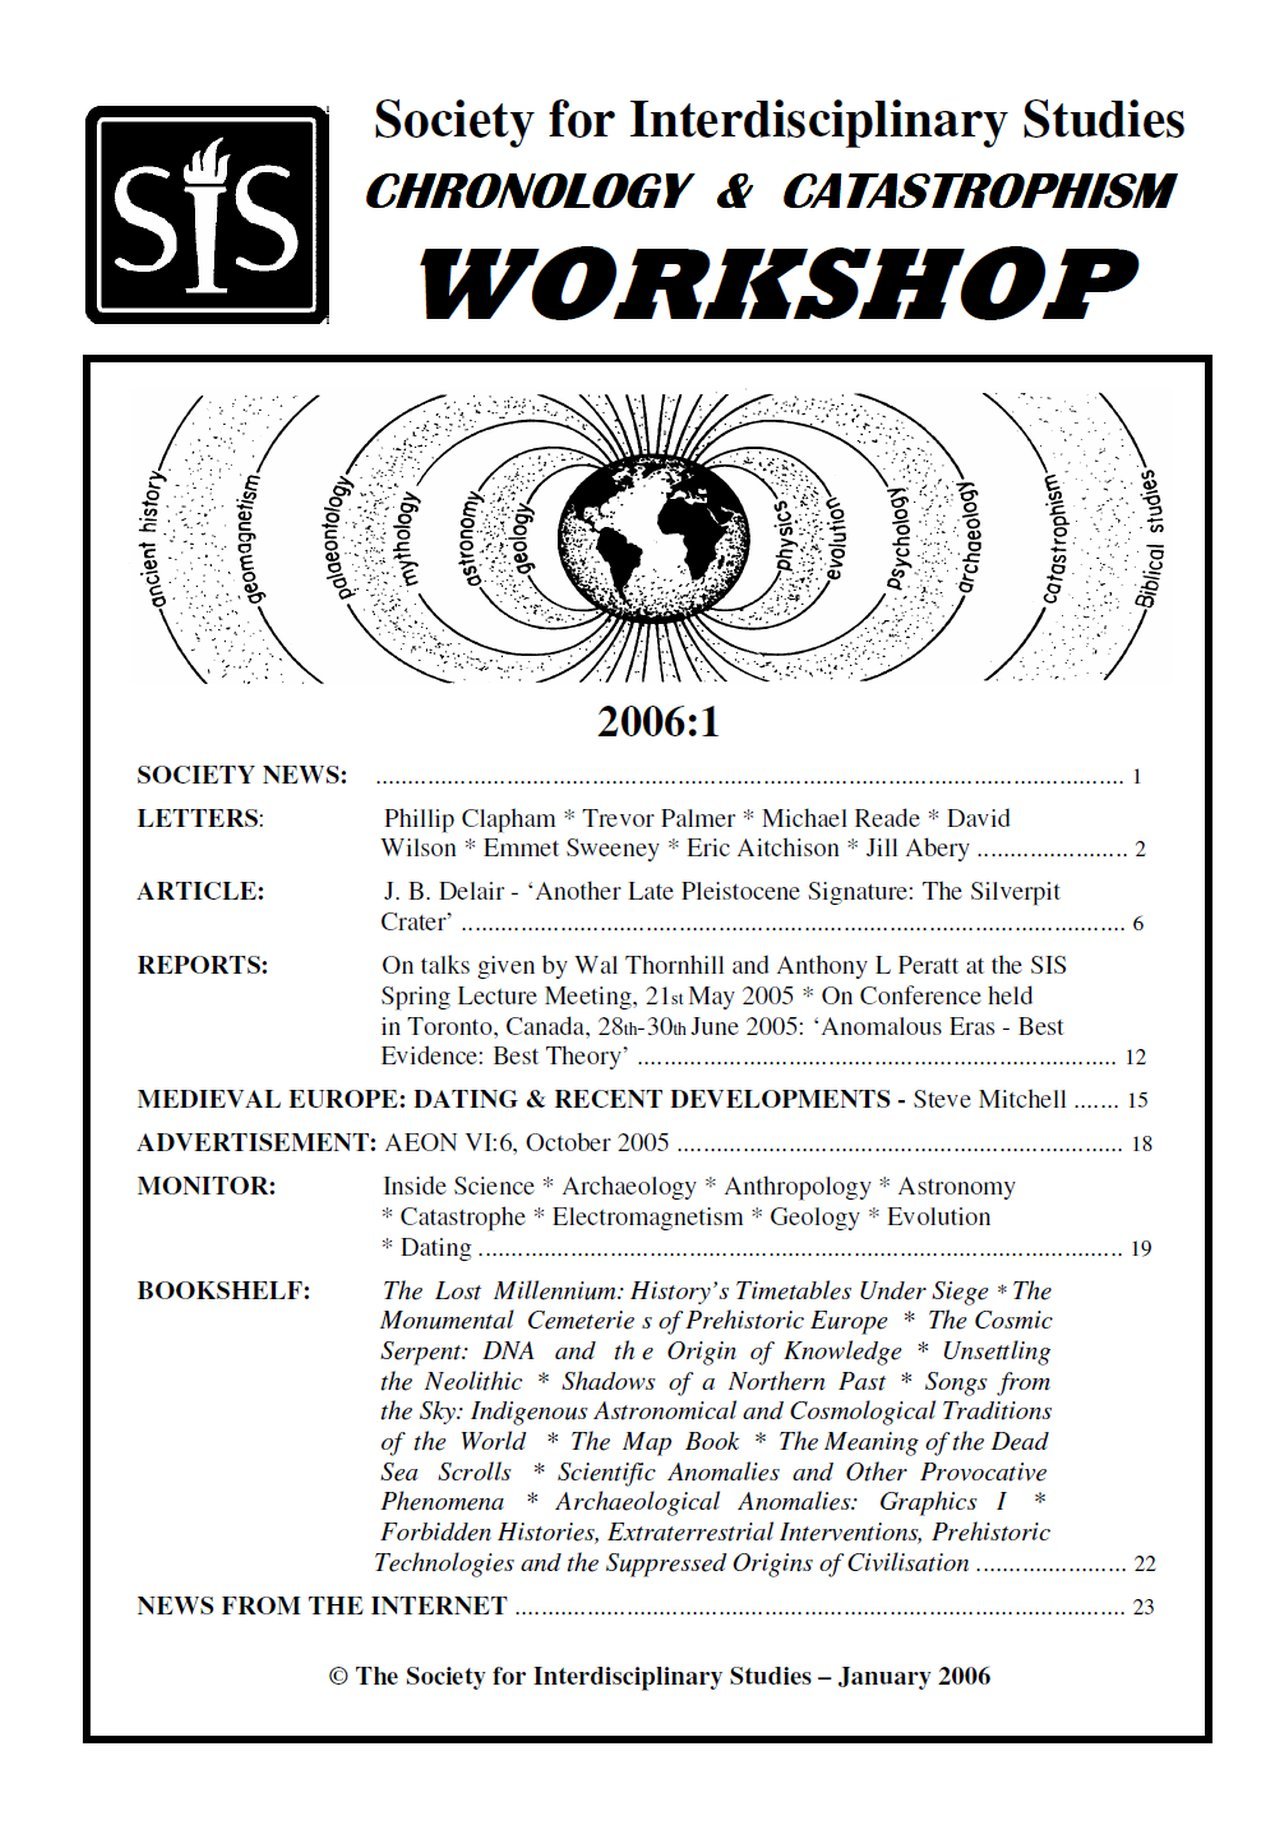 SIS Workshop 2006-1 cover